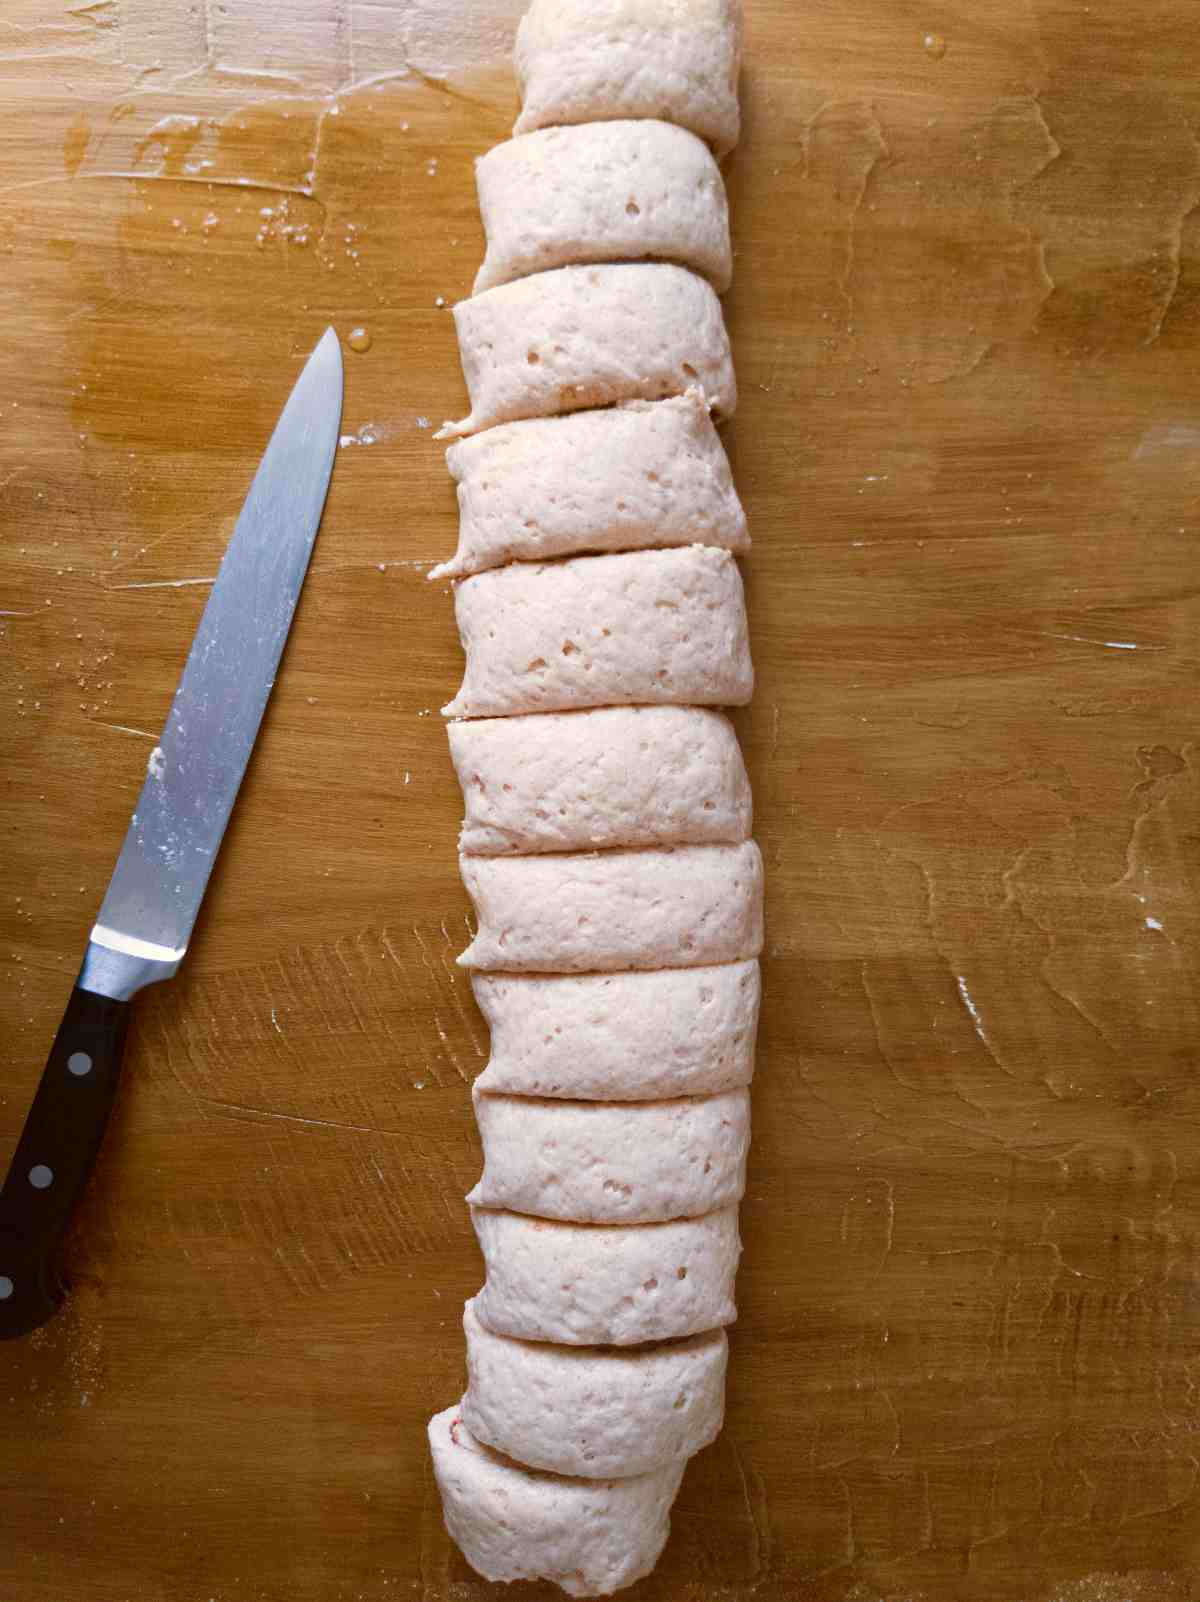 Sliced cinnamon rolls with a knife.